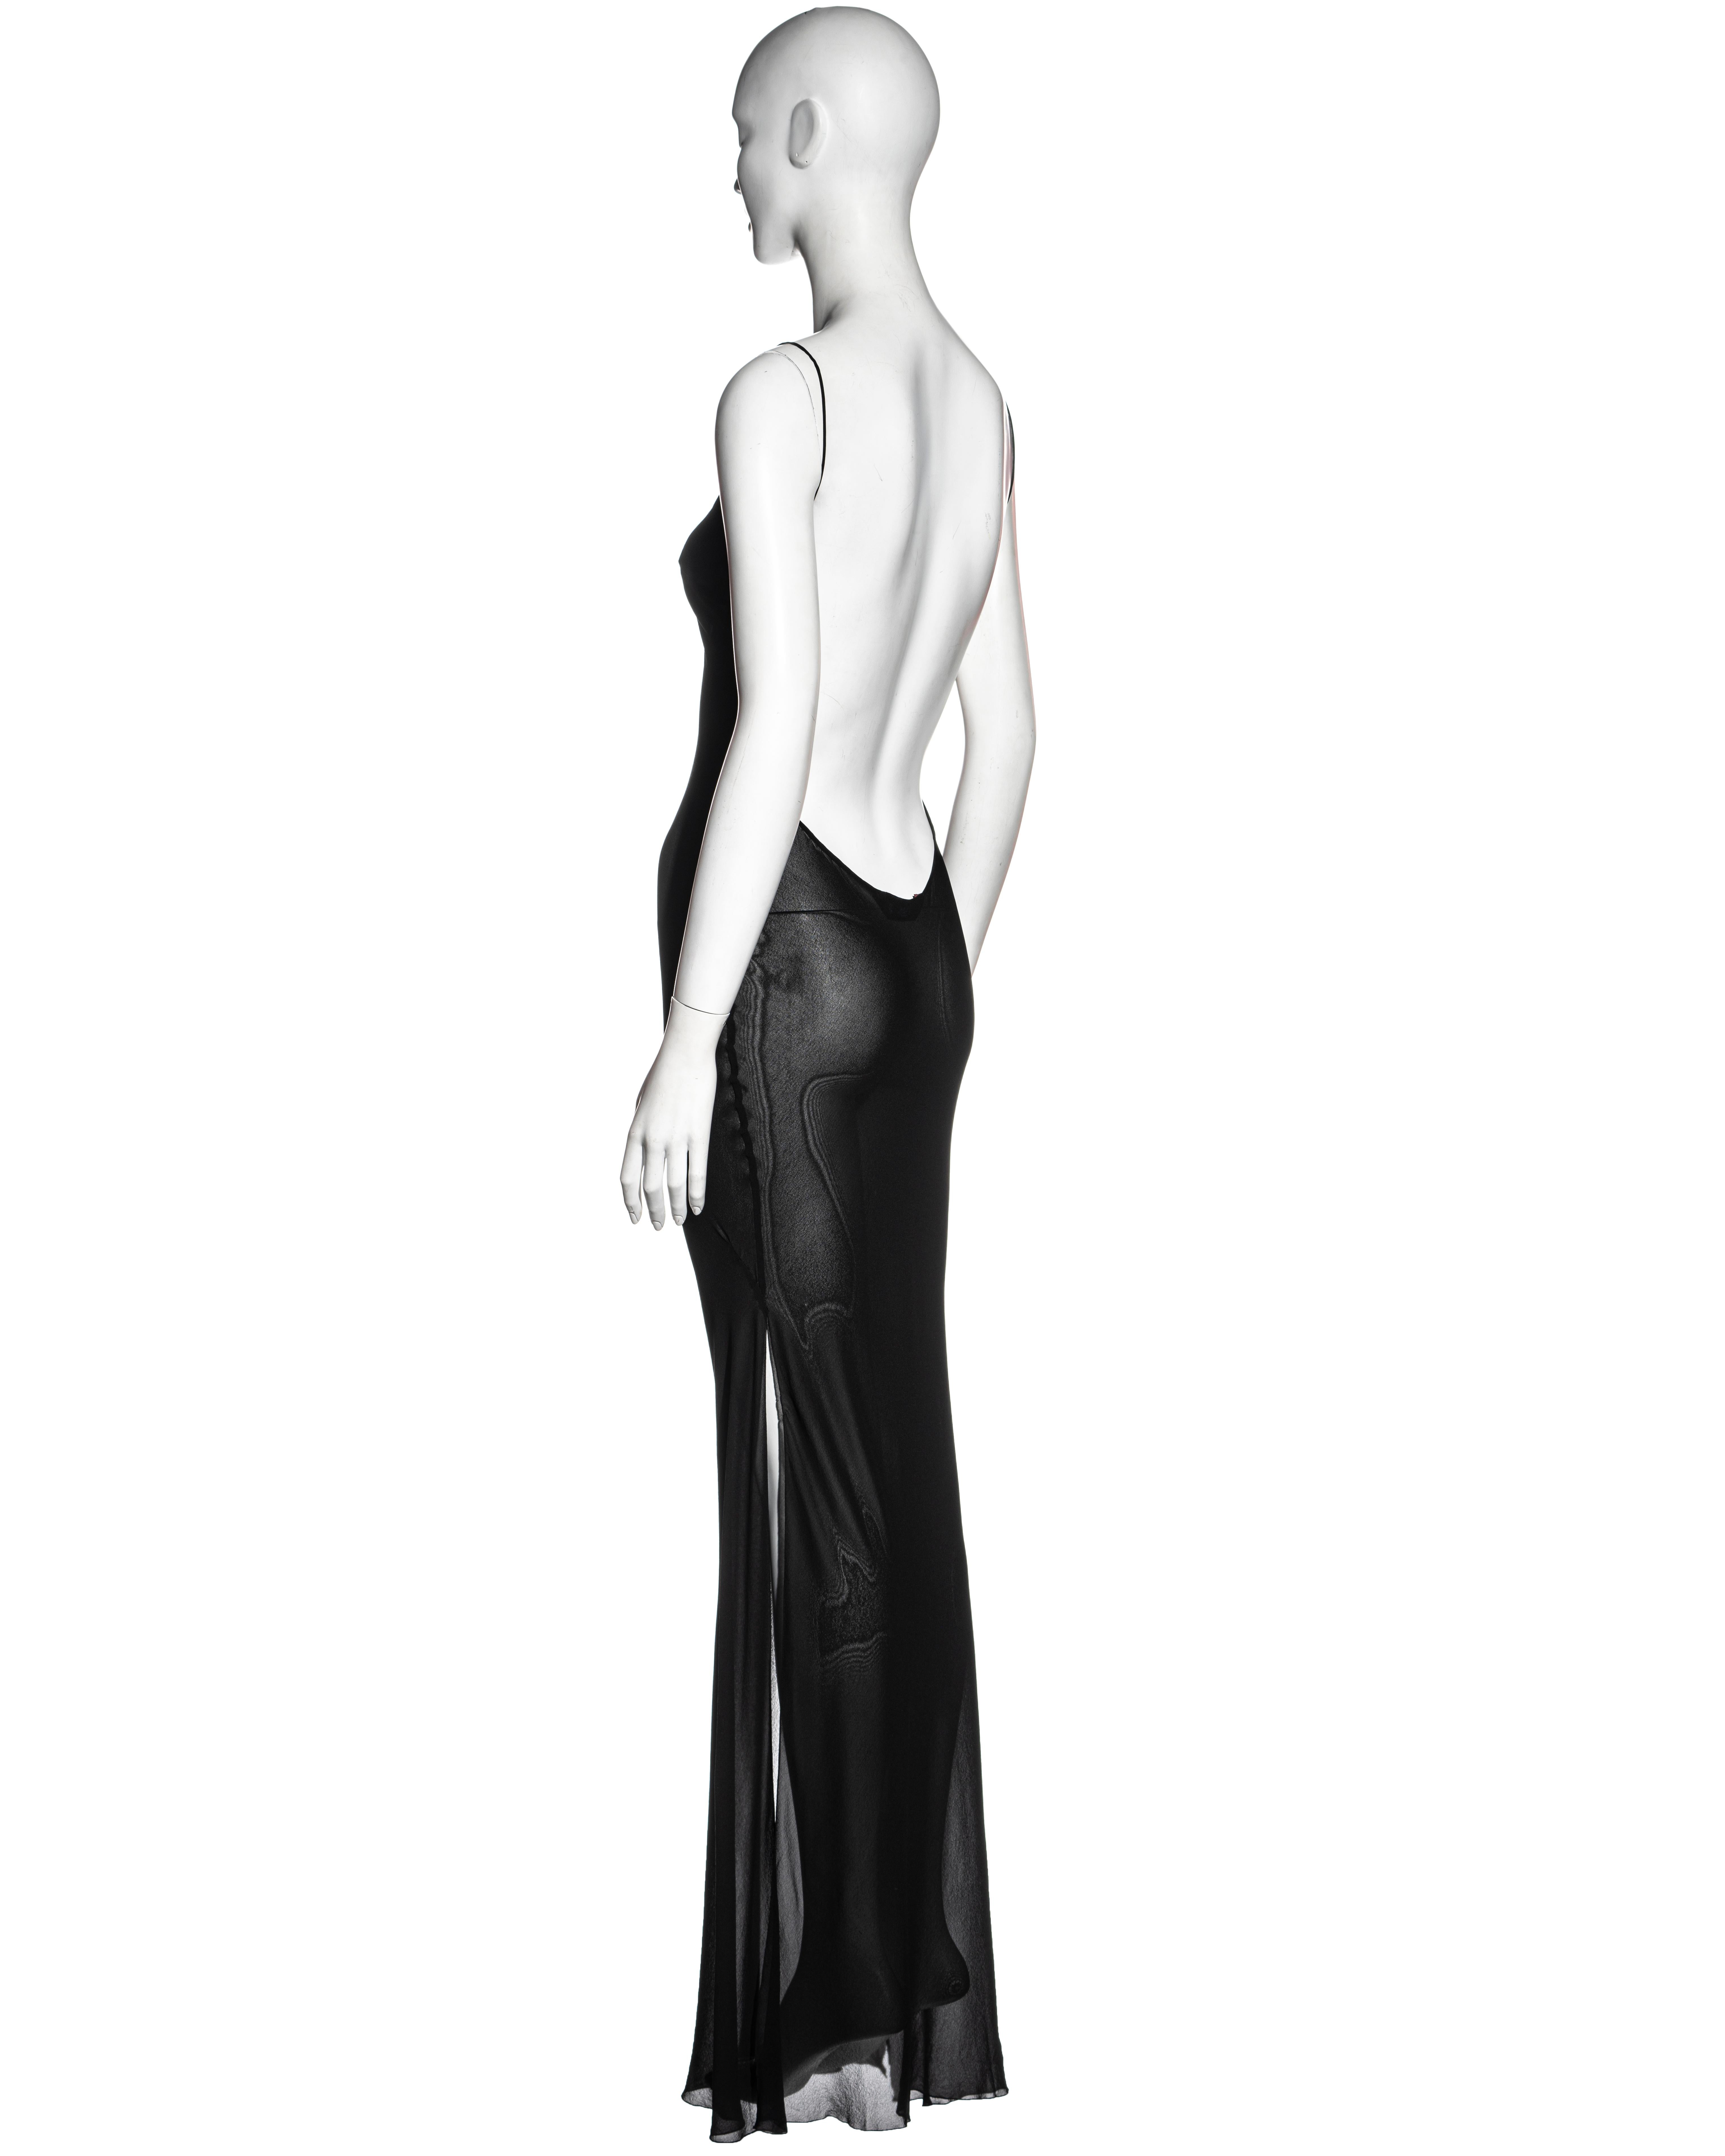 John Galliano black silk chiffon double layered bias cut dress, c. 1995 - 1999 3